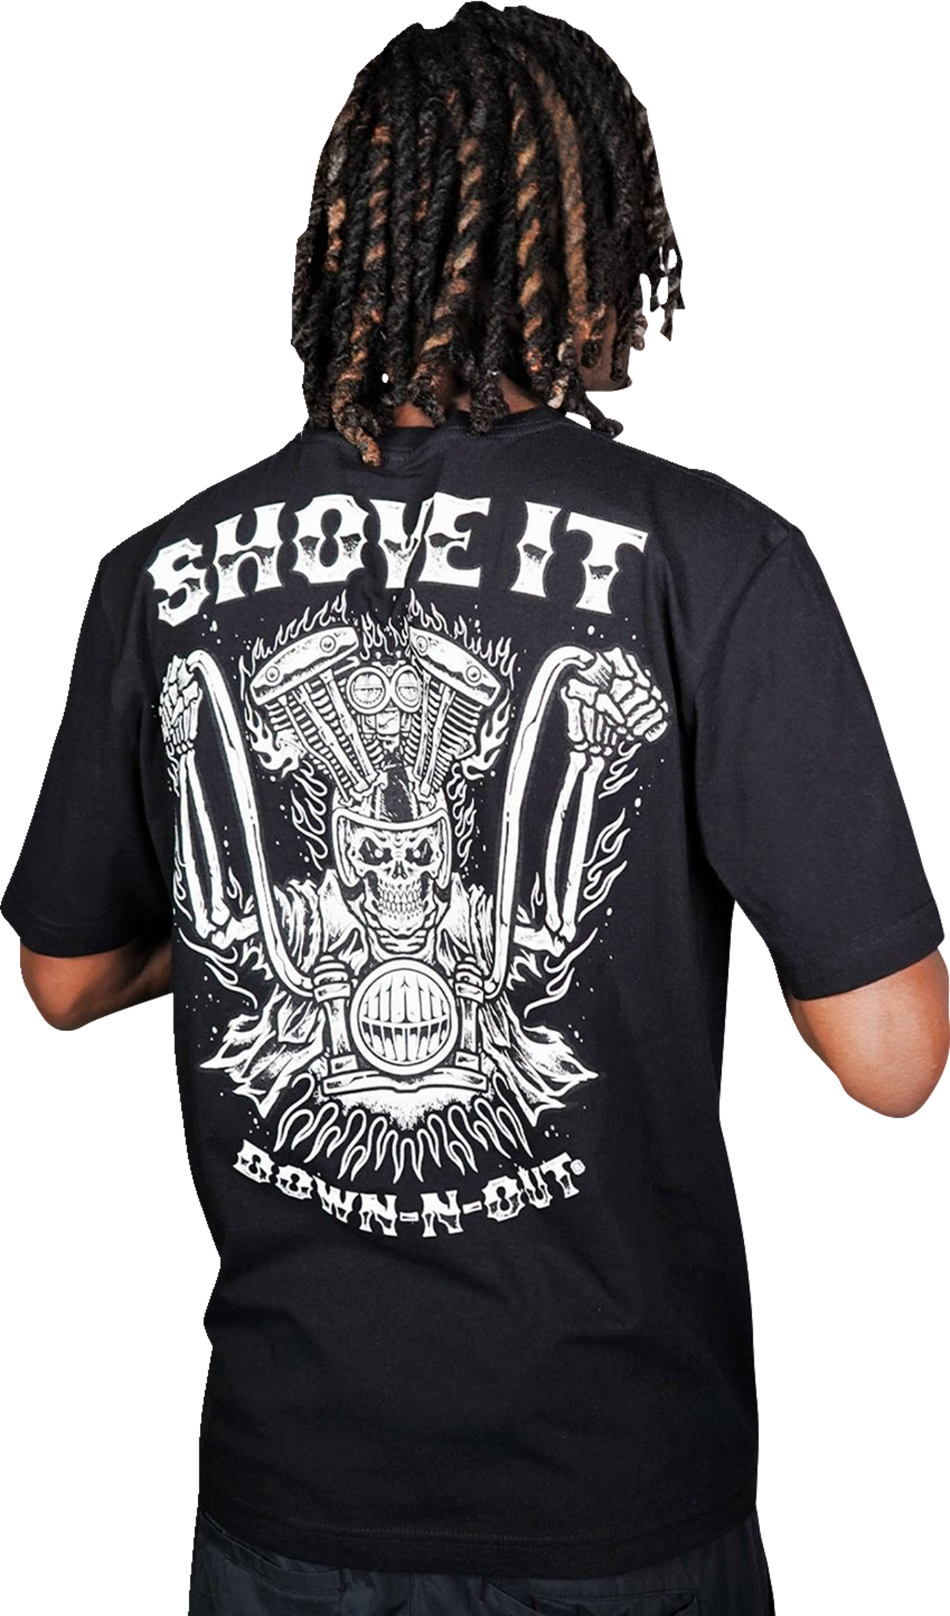 LETHAL THREAT Down-N-Out Shove It T-Shirt - Black - Medium DT10046M